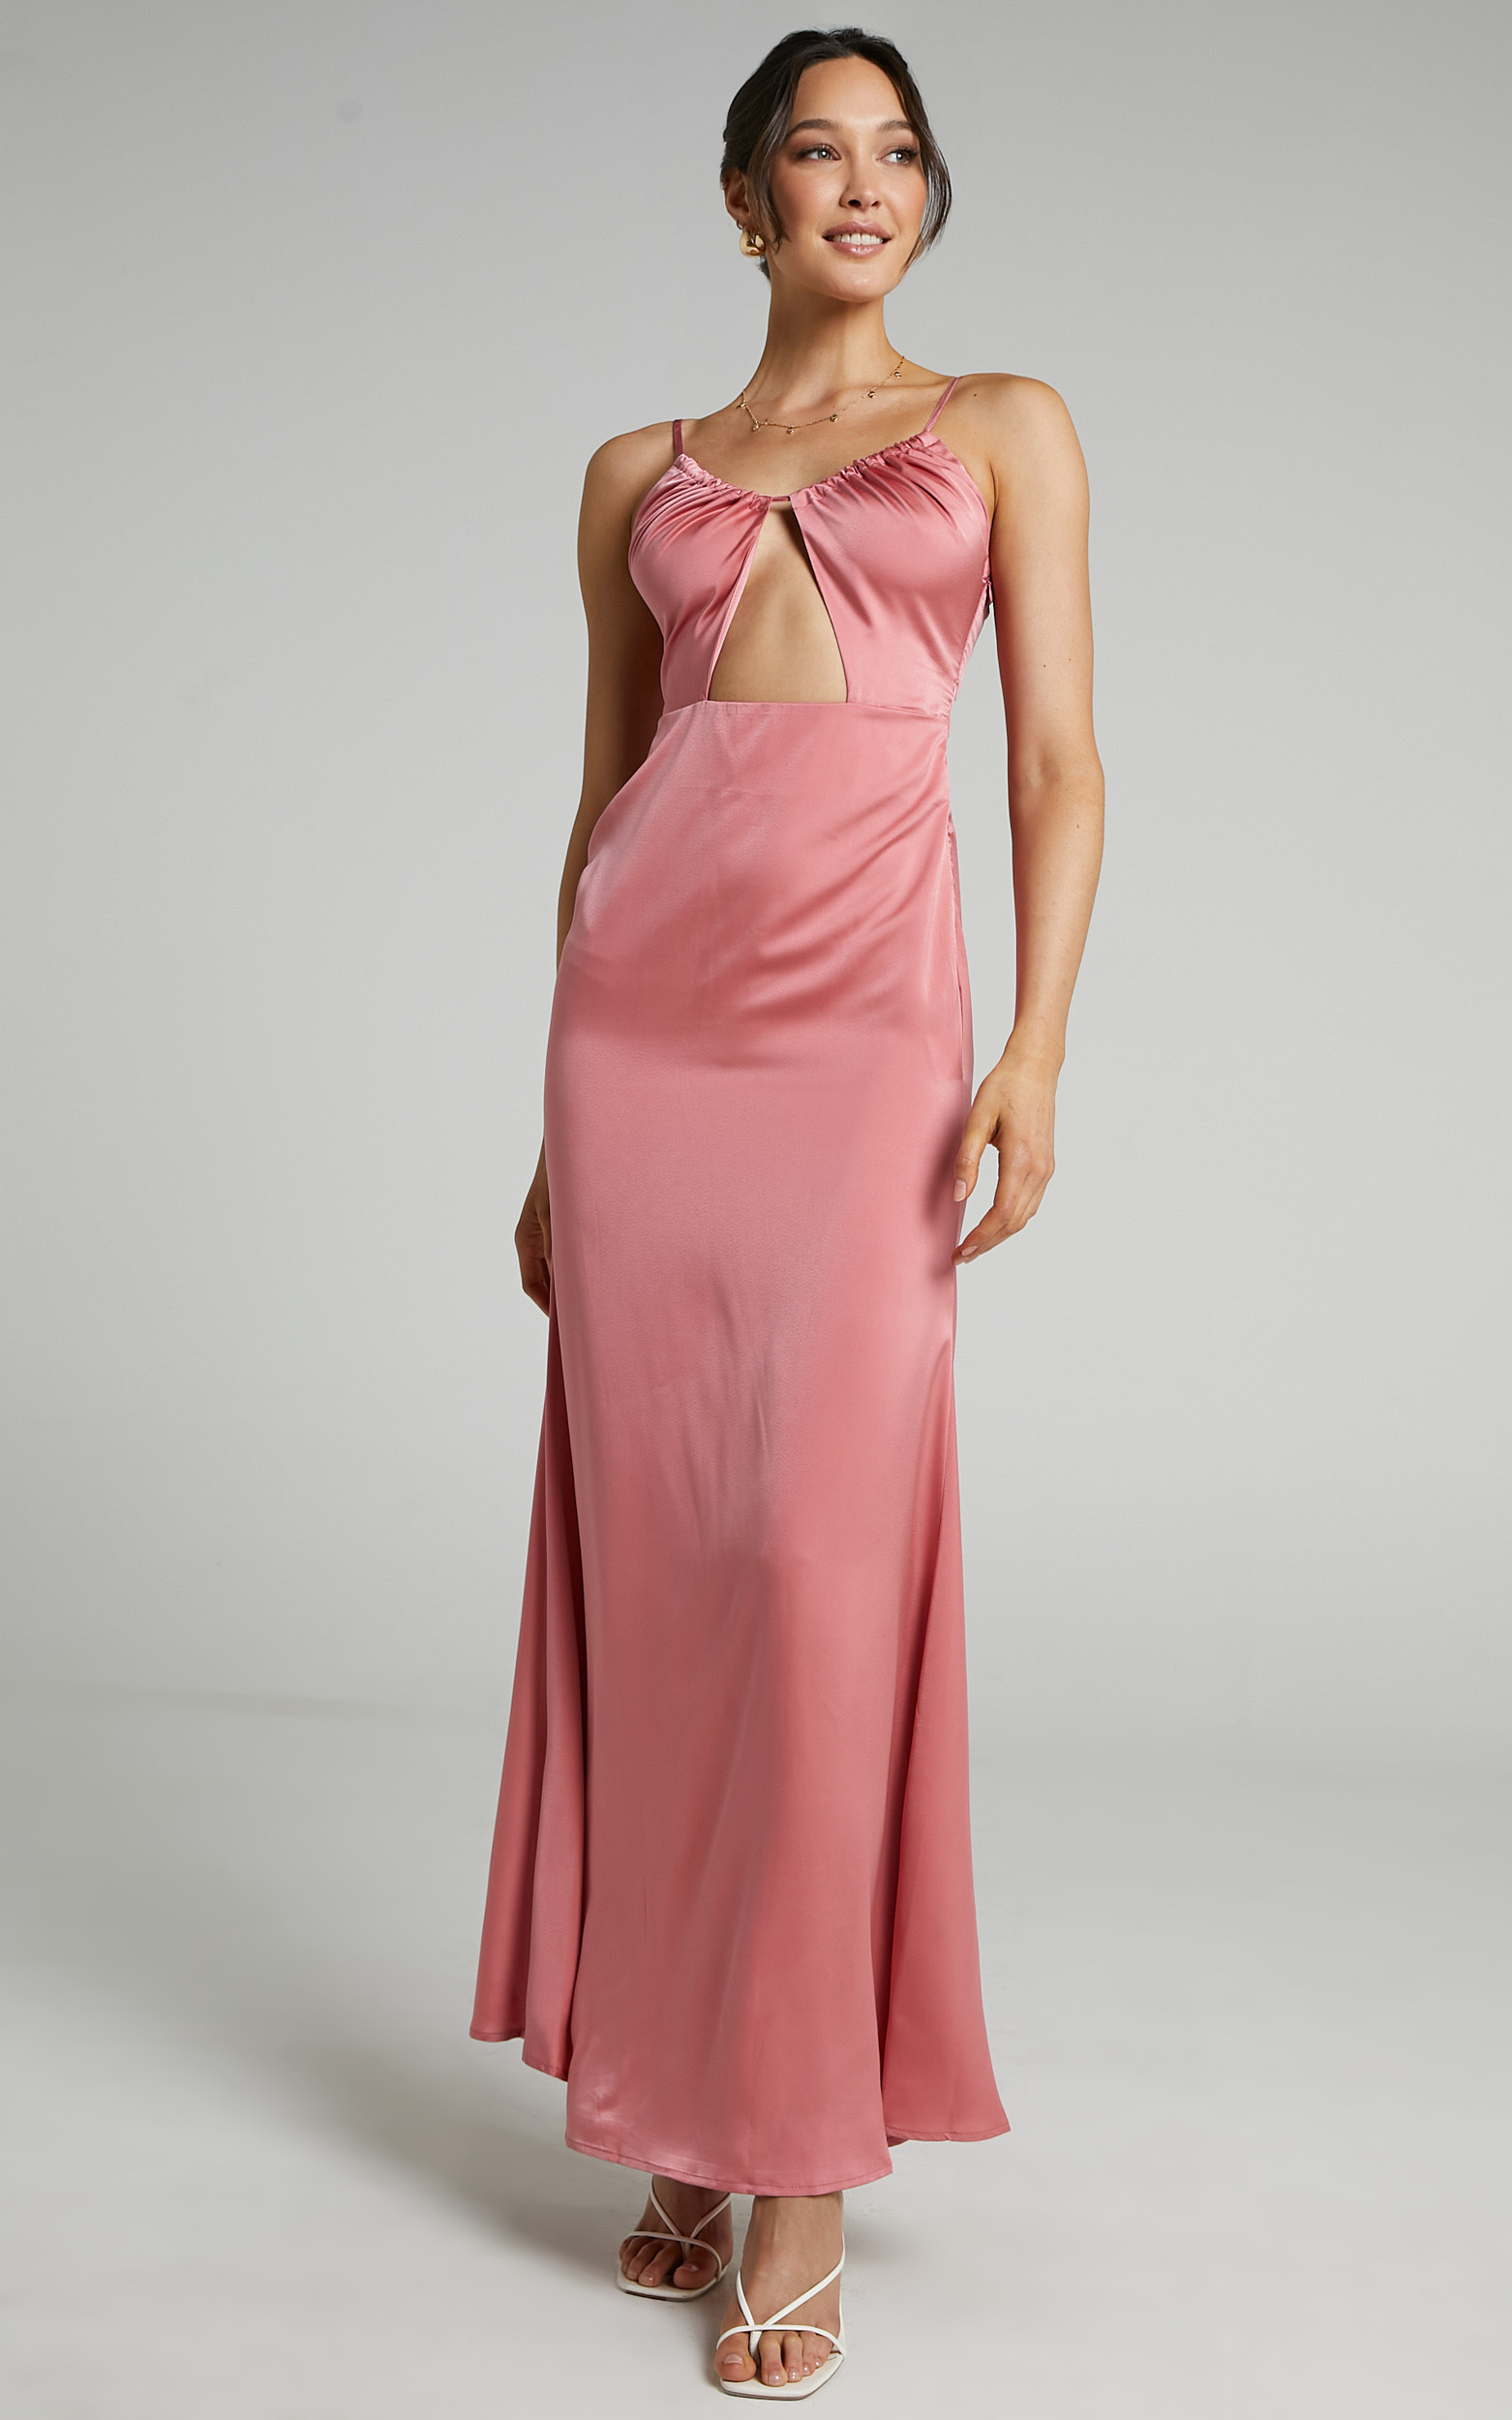 Lisah Maxi Dress in Dusty Rose Satin - 06, PNK1, hi-res image number null